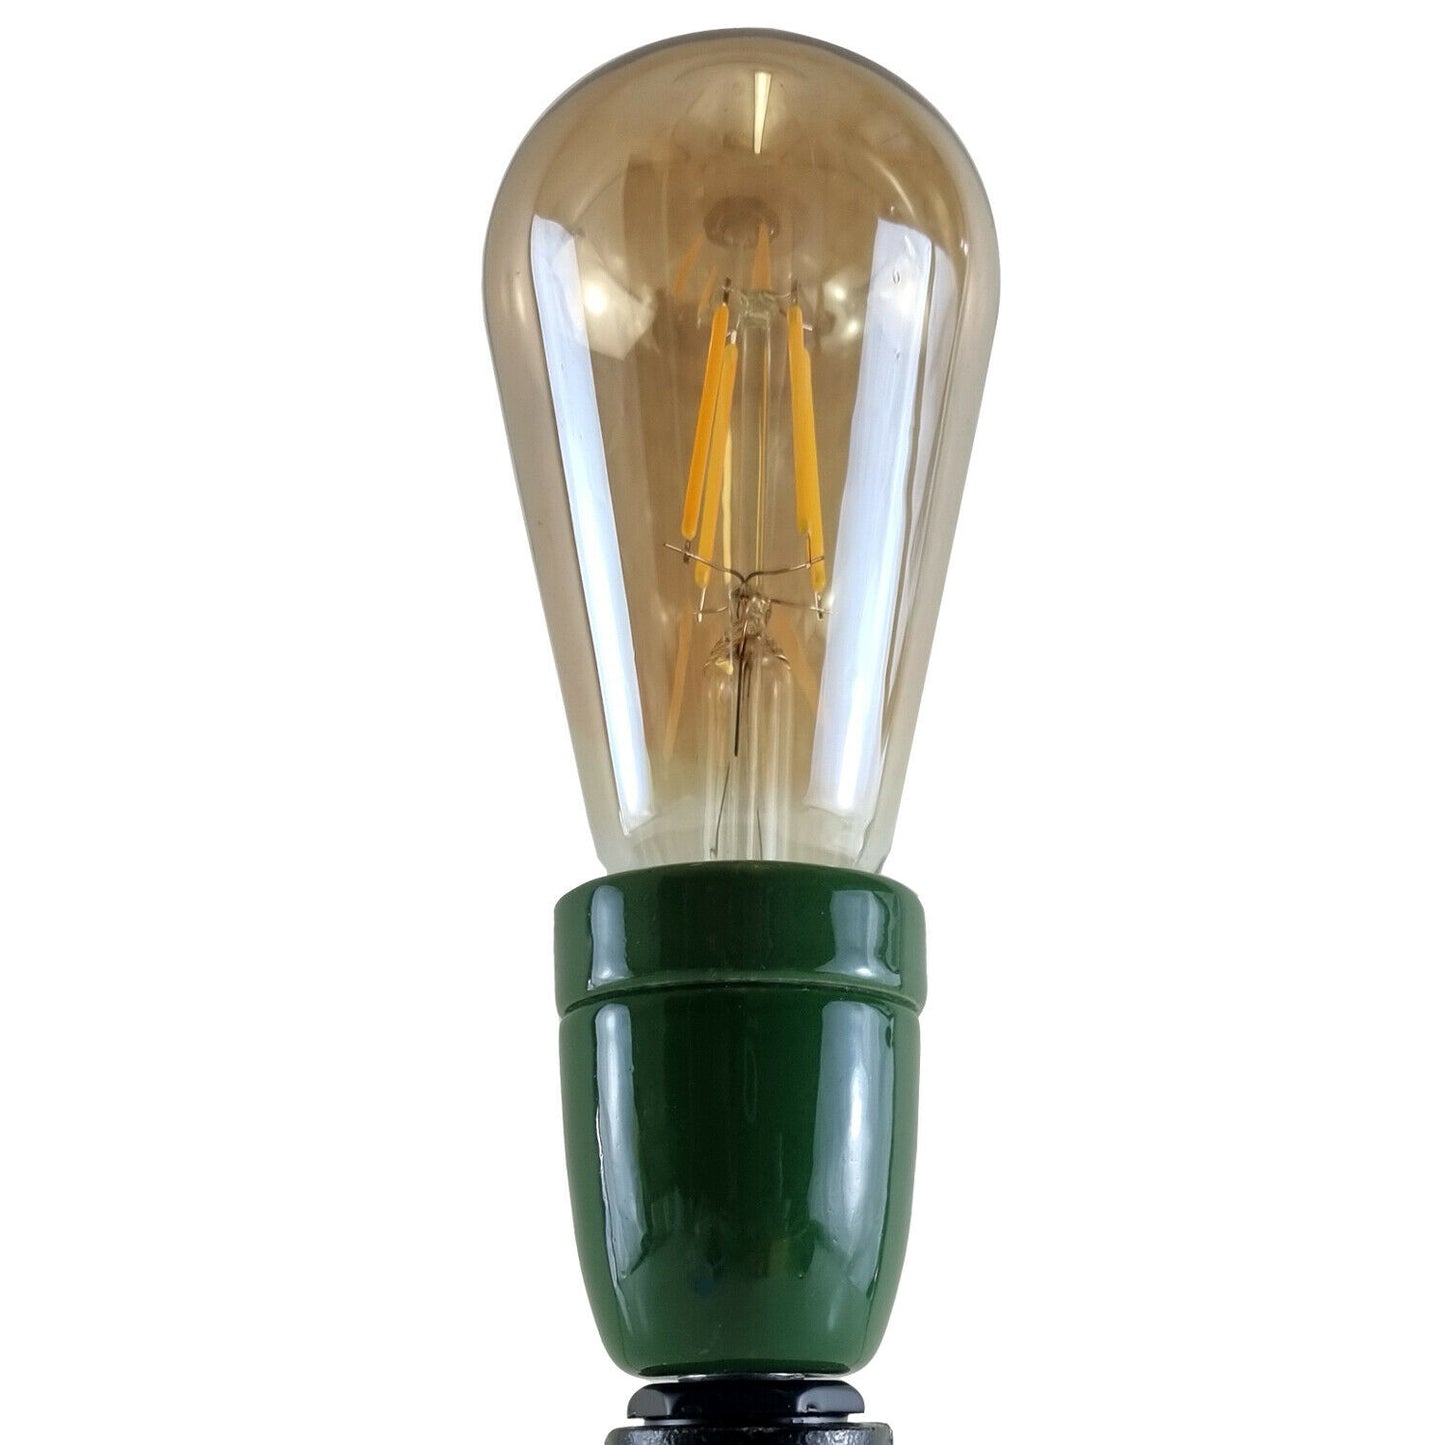 Vintage Industrial E27 Holder Black and Green Ceiling Light Fitting Flush Pipe Vintage Lighting~2622